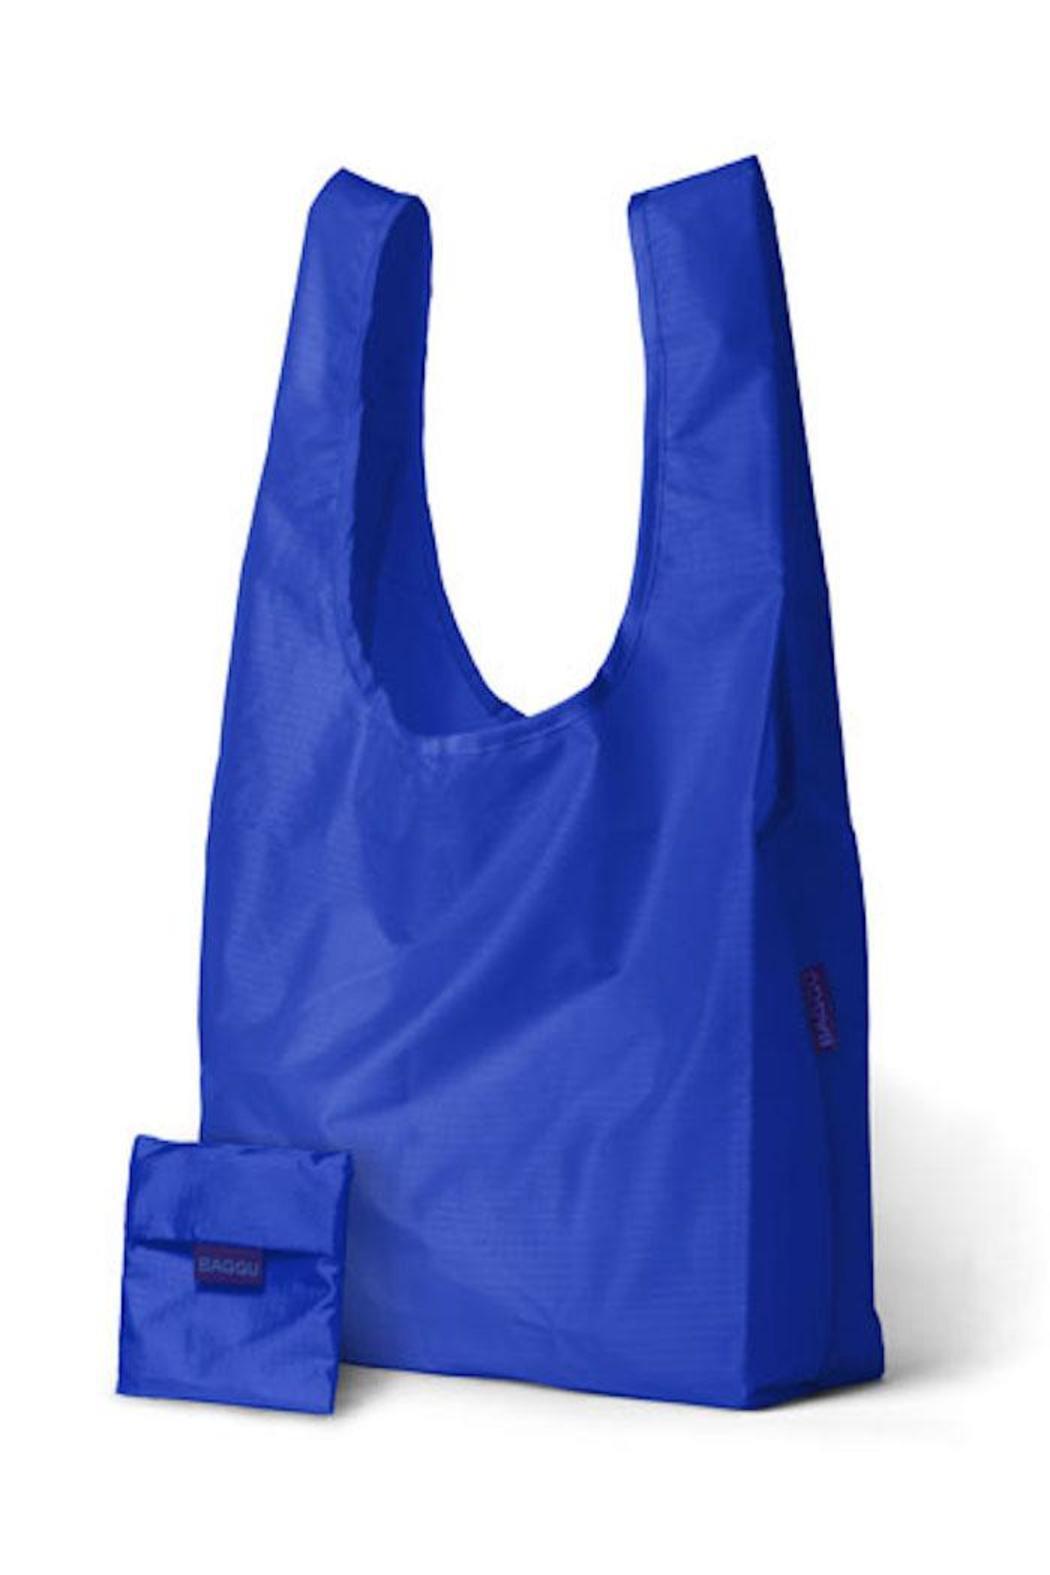 Non Woven Shopping Bag for Easy Storage